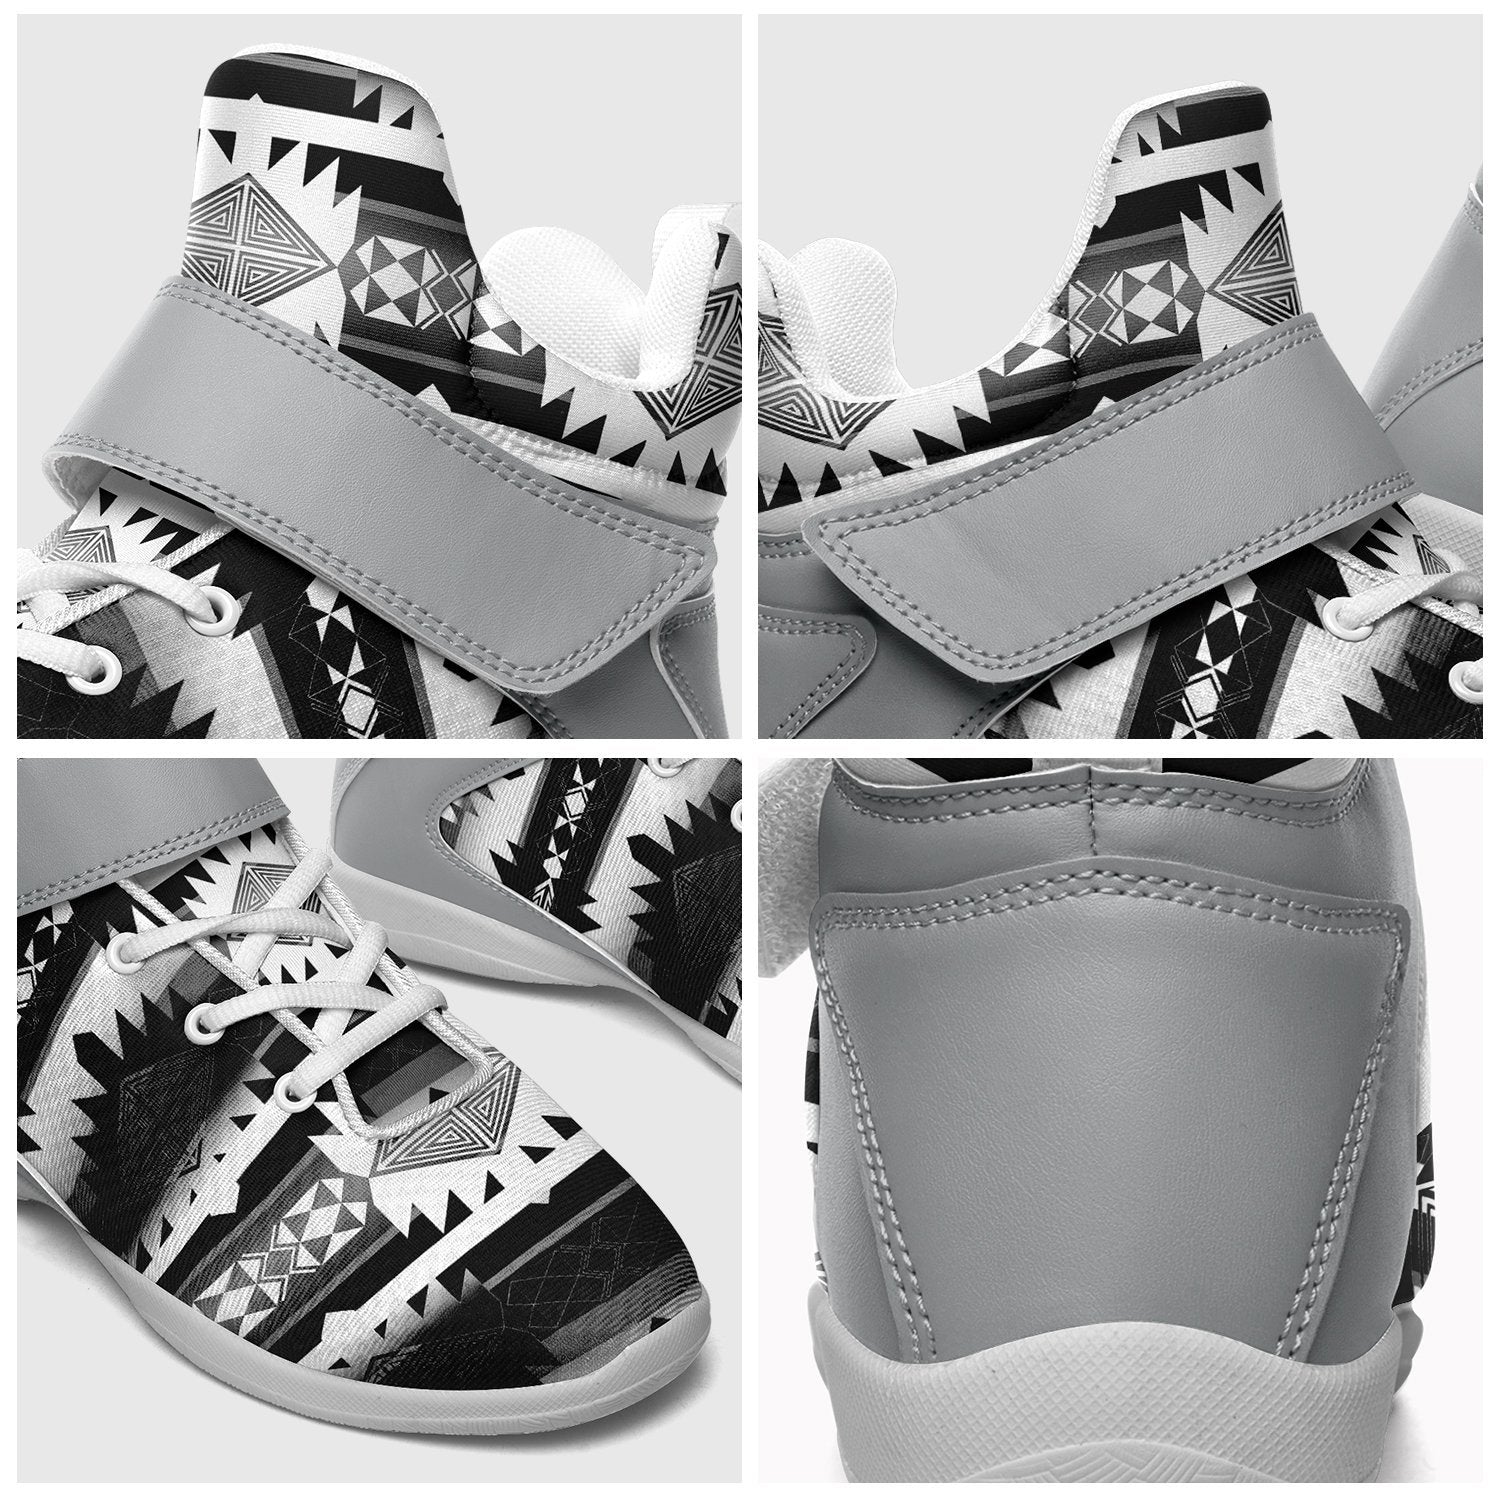 Okotoks Black and White Ipottaa Basketball / Sport High Top Shoes - White Sole 49 Dzine 